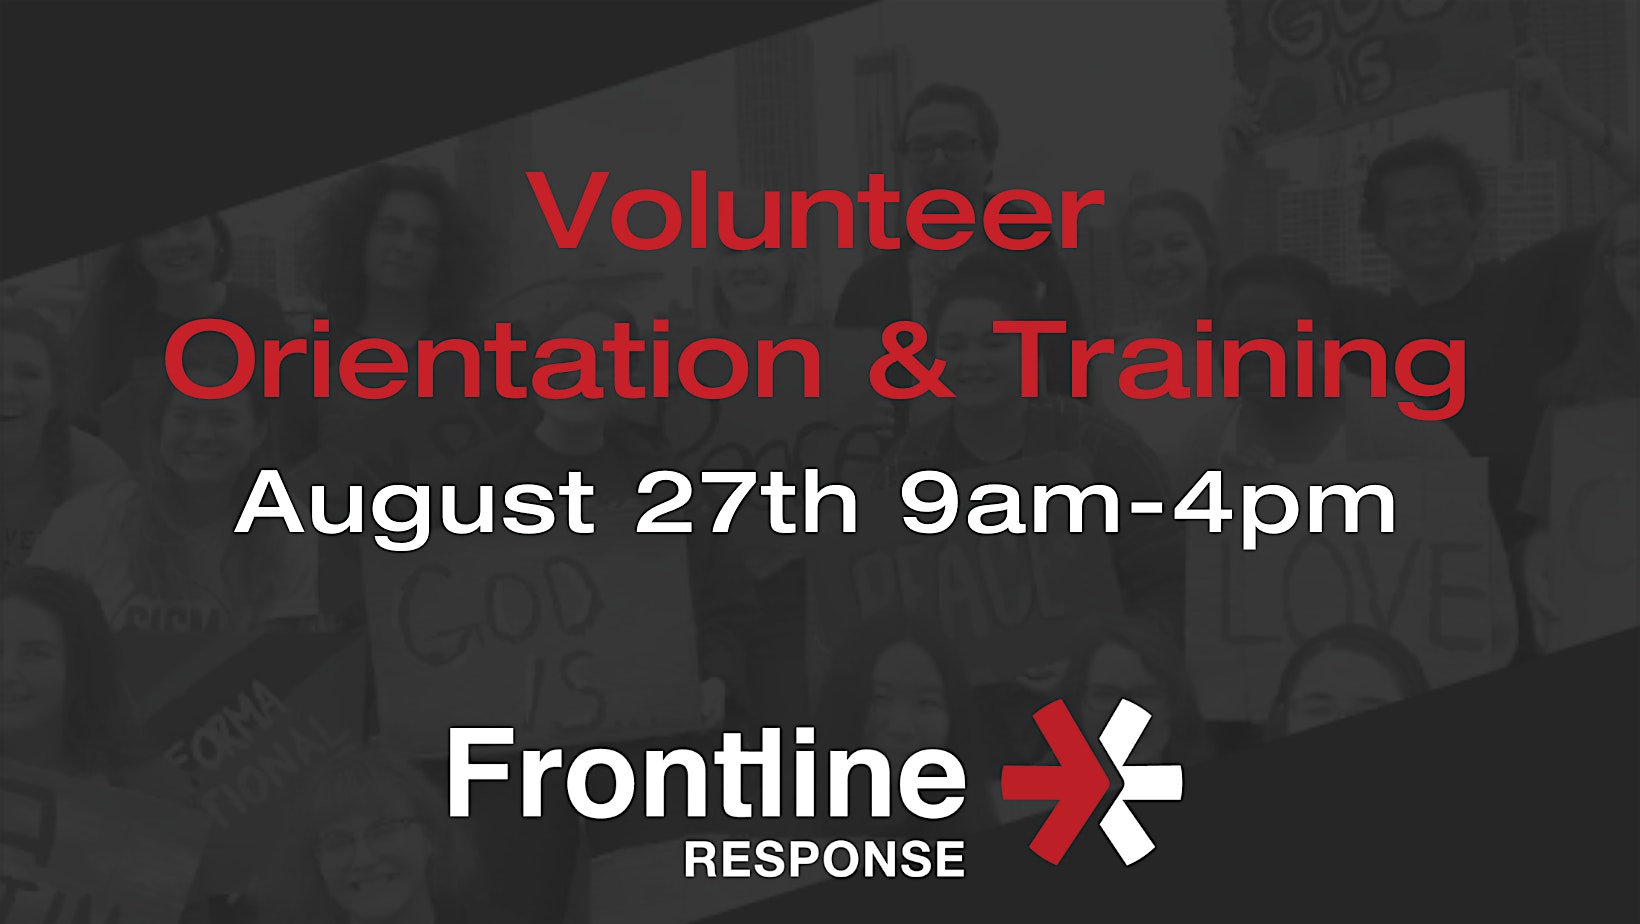 Frontline Response - Volunteer Orientation and Training